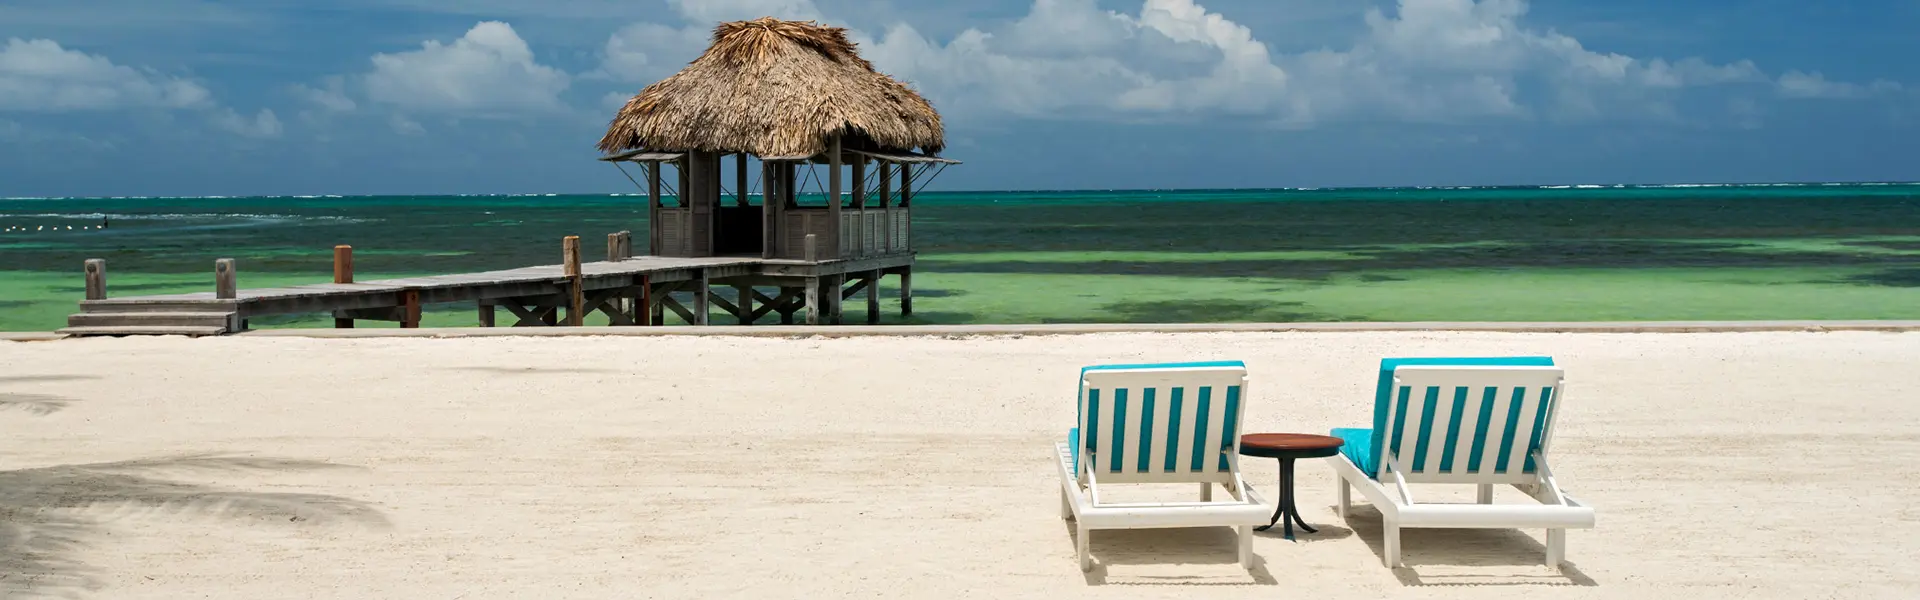 Victoria house beach resort Belize